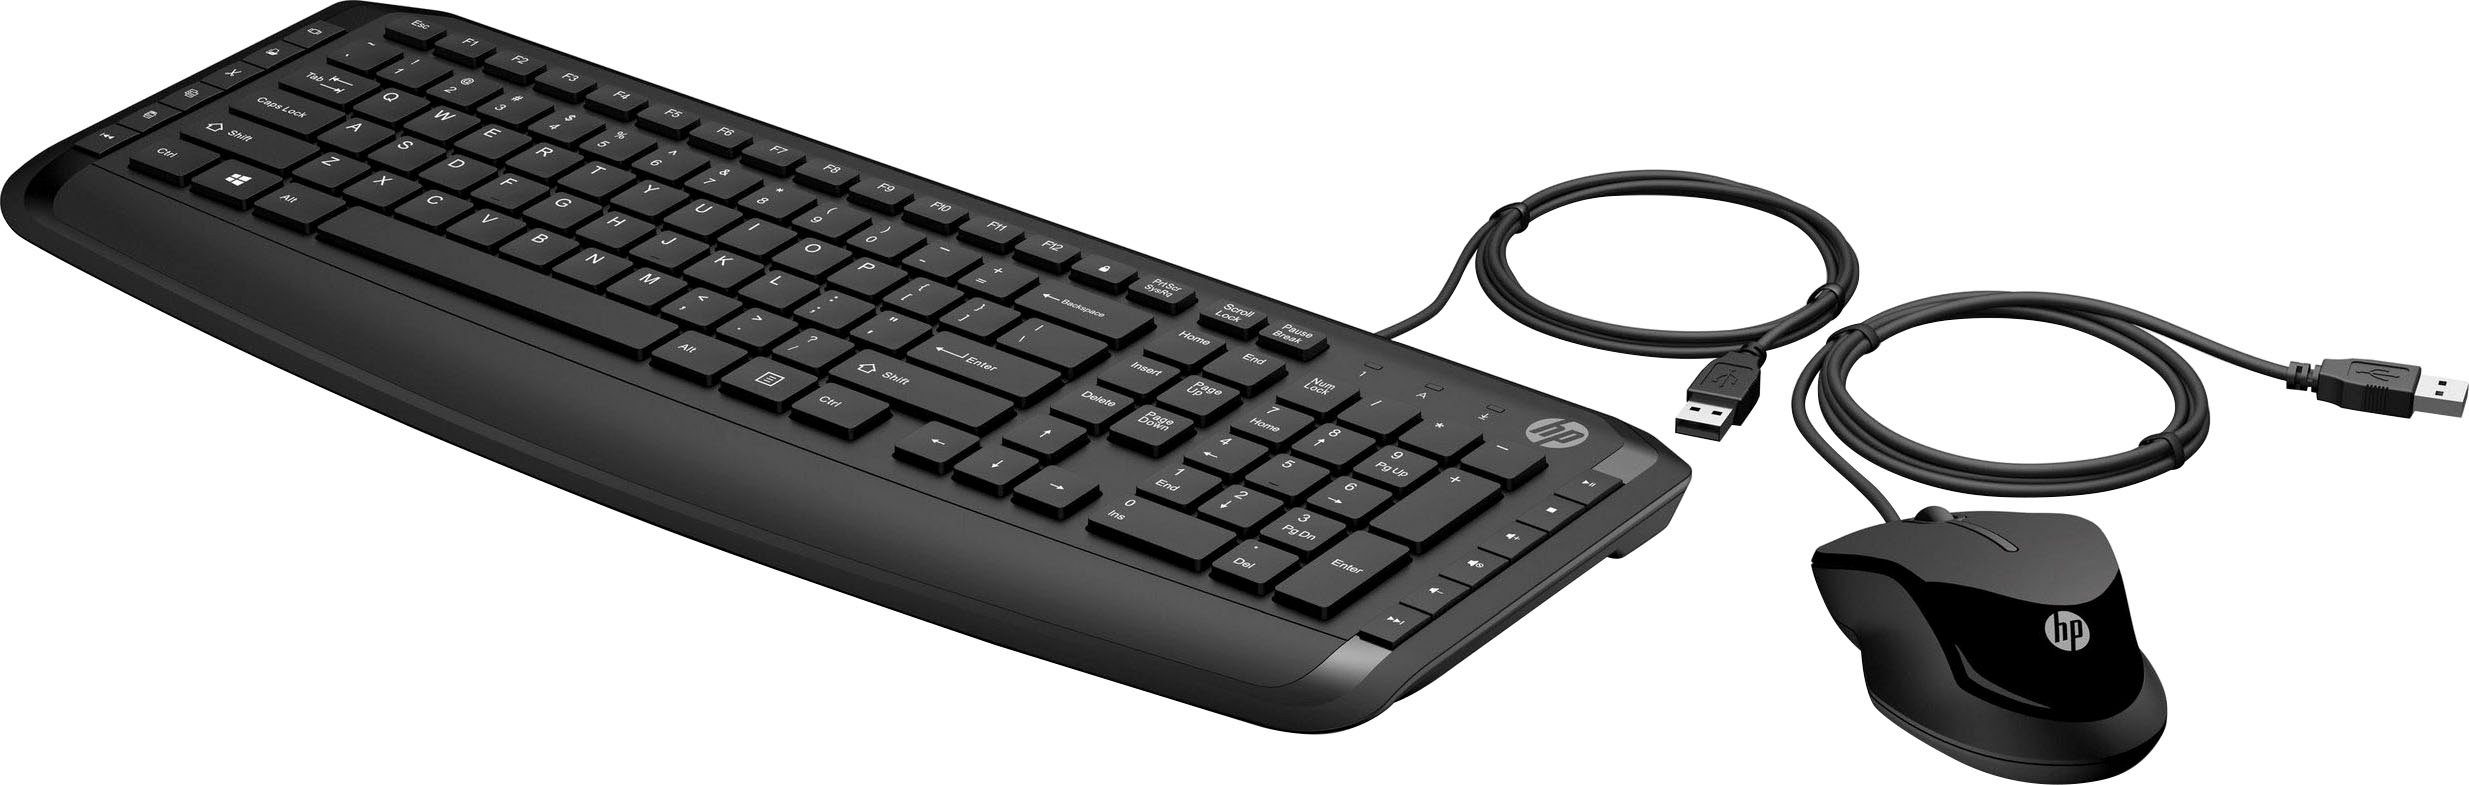 HP Pavillon Tastatur- 200 Maus-Set und